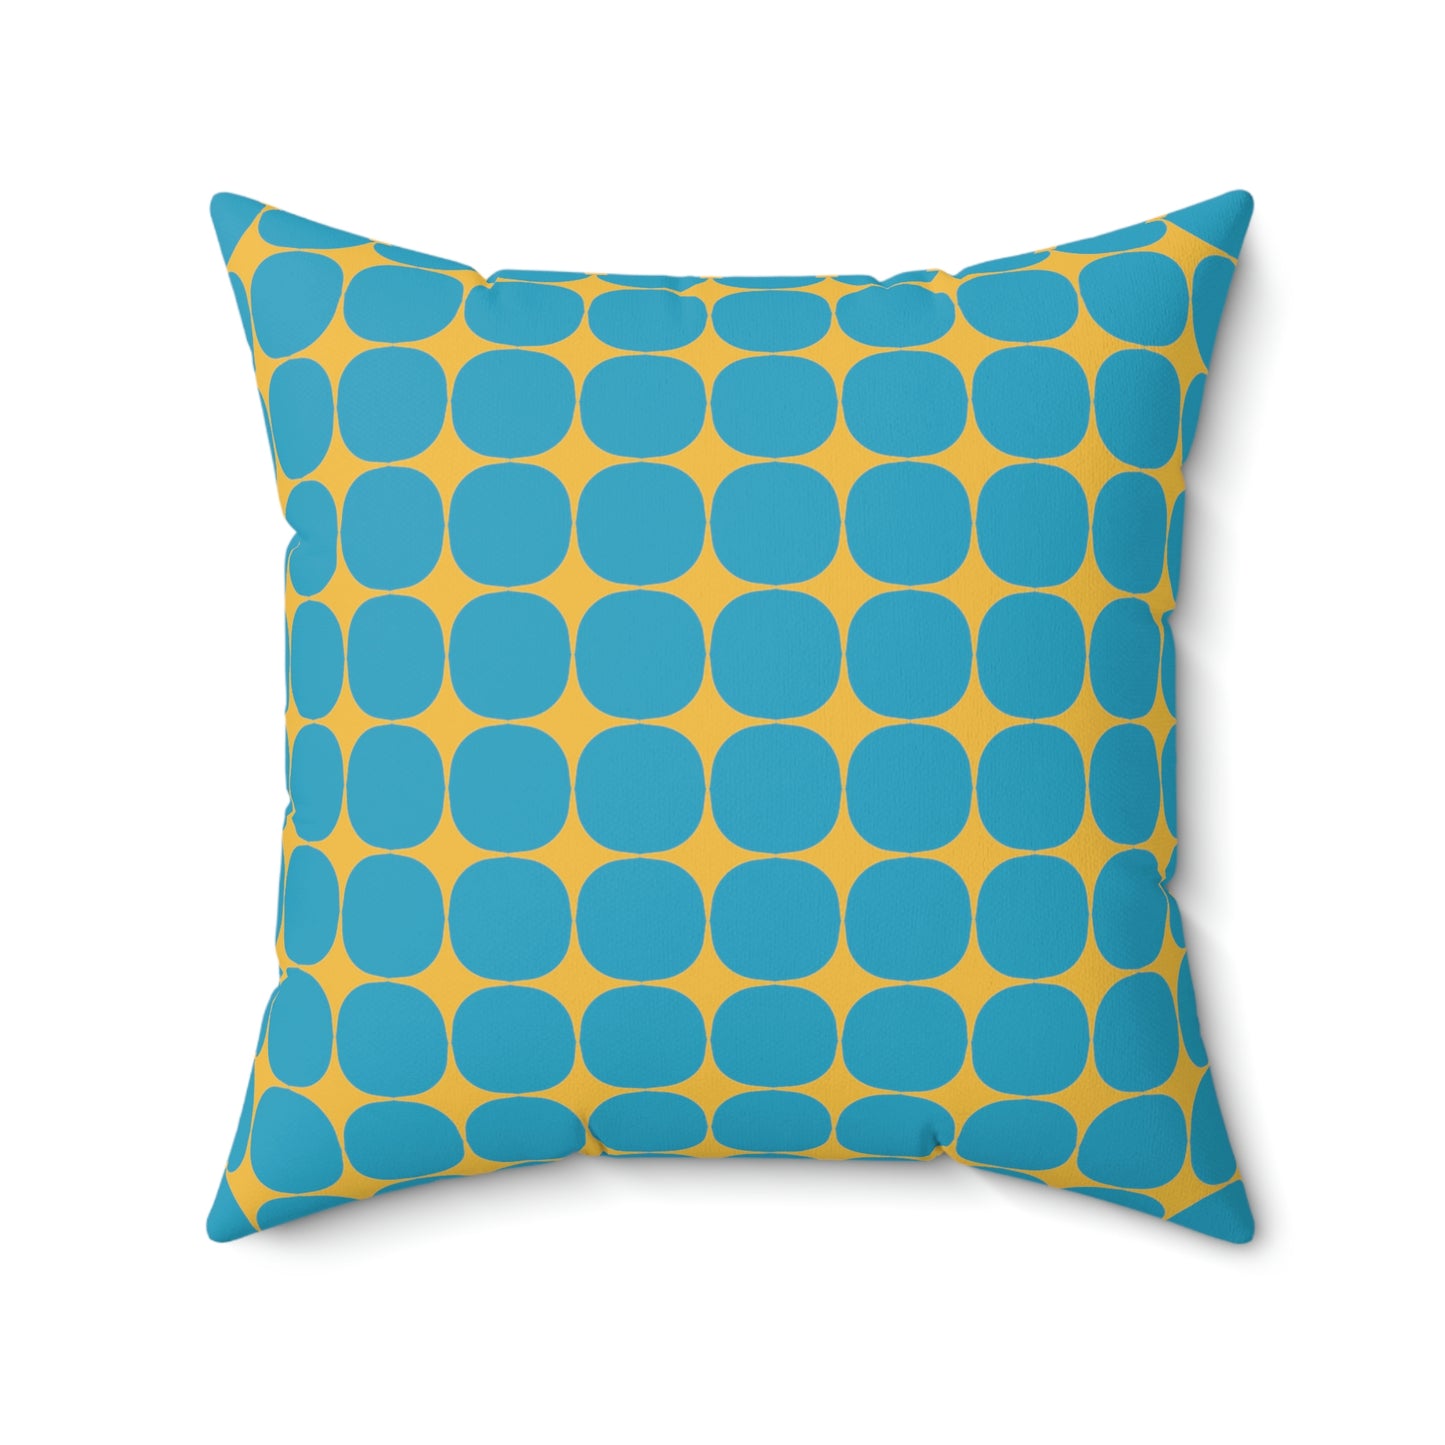 Spun Polyester Square Pillow Case “Rhombus Star on Turquoise”